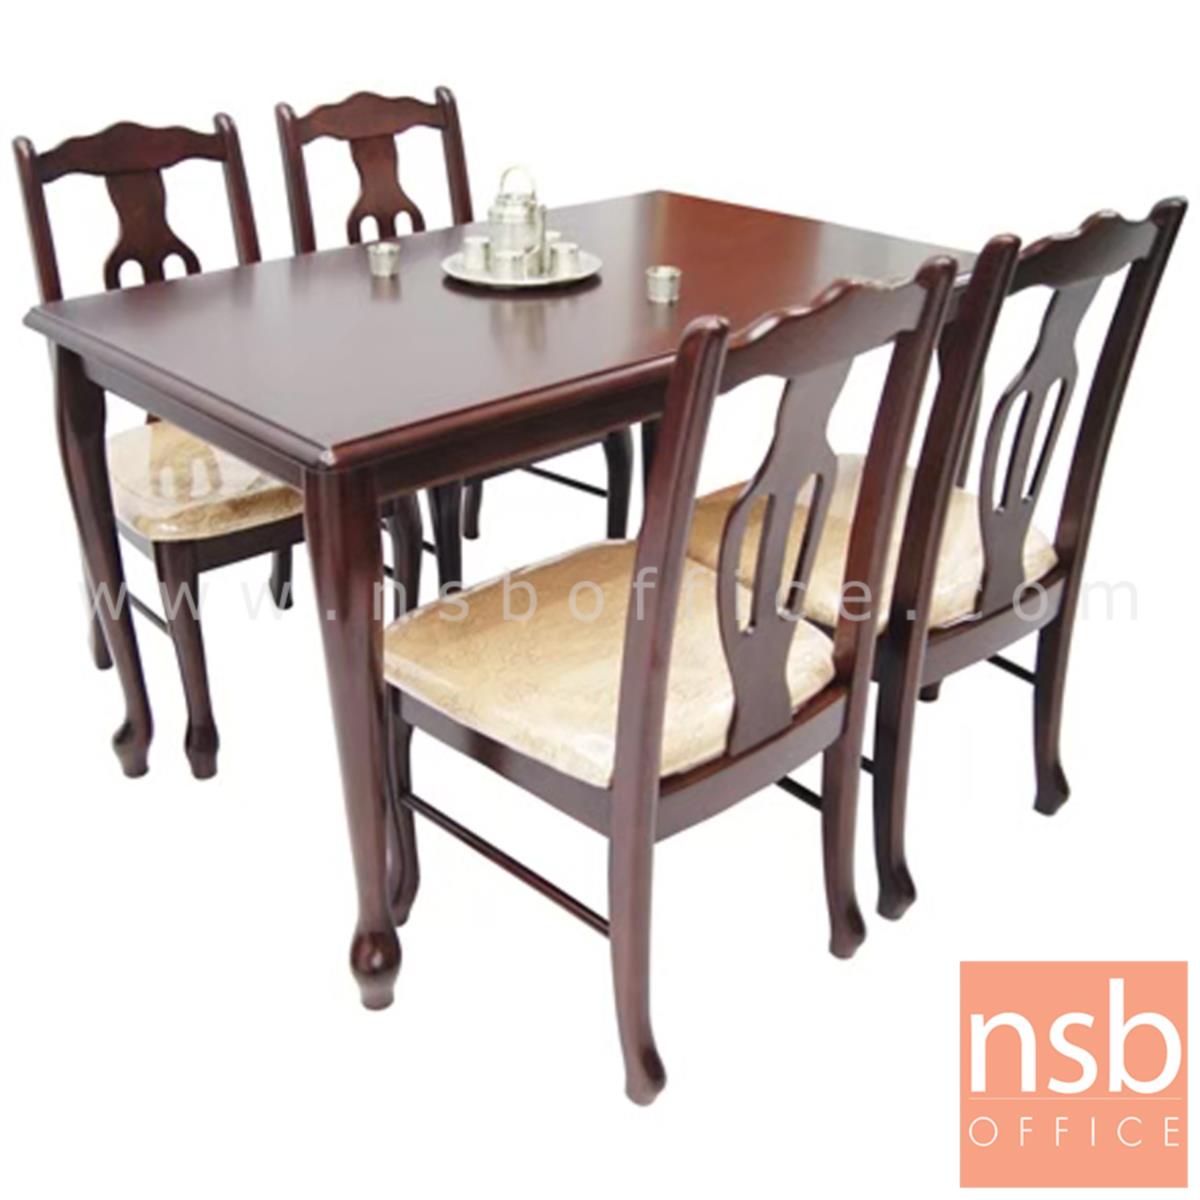 G14A174:ชุดโต๊ะรับประทานอาหารหน้าไม้ รุ่น SHOLL 4 ,5 ฟุต ขนาด 125W ,150W cm.  พร้อมเก้าอี้